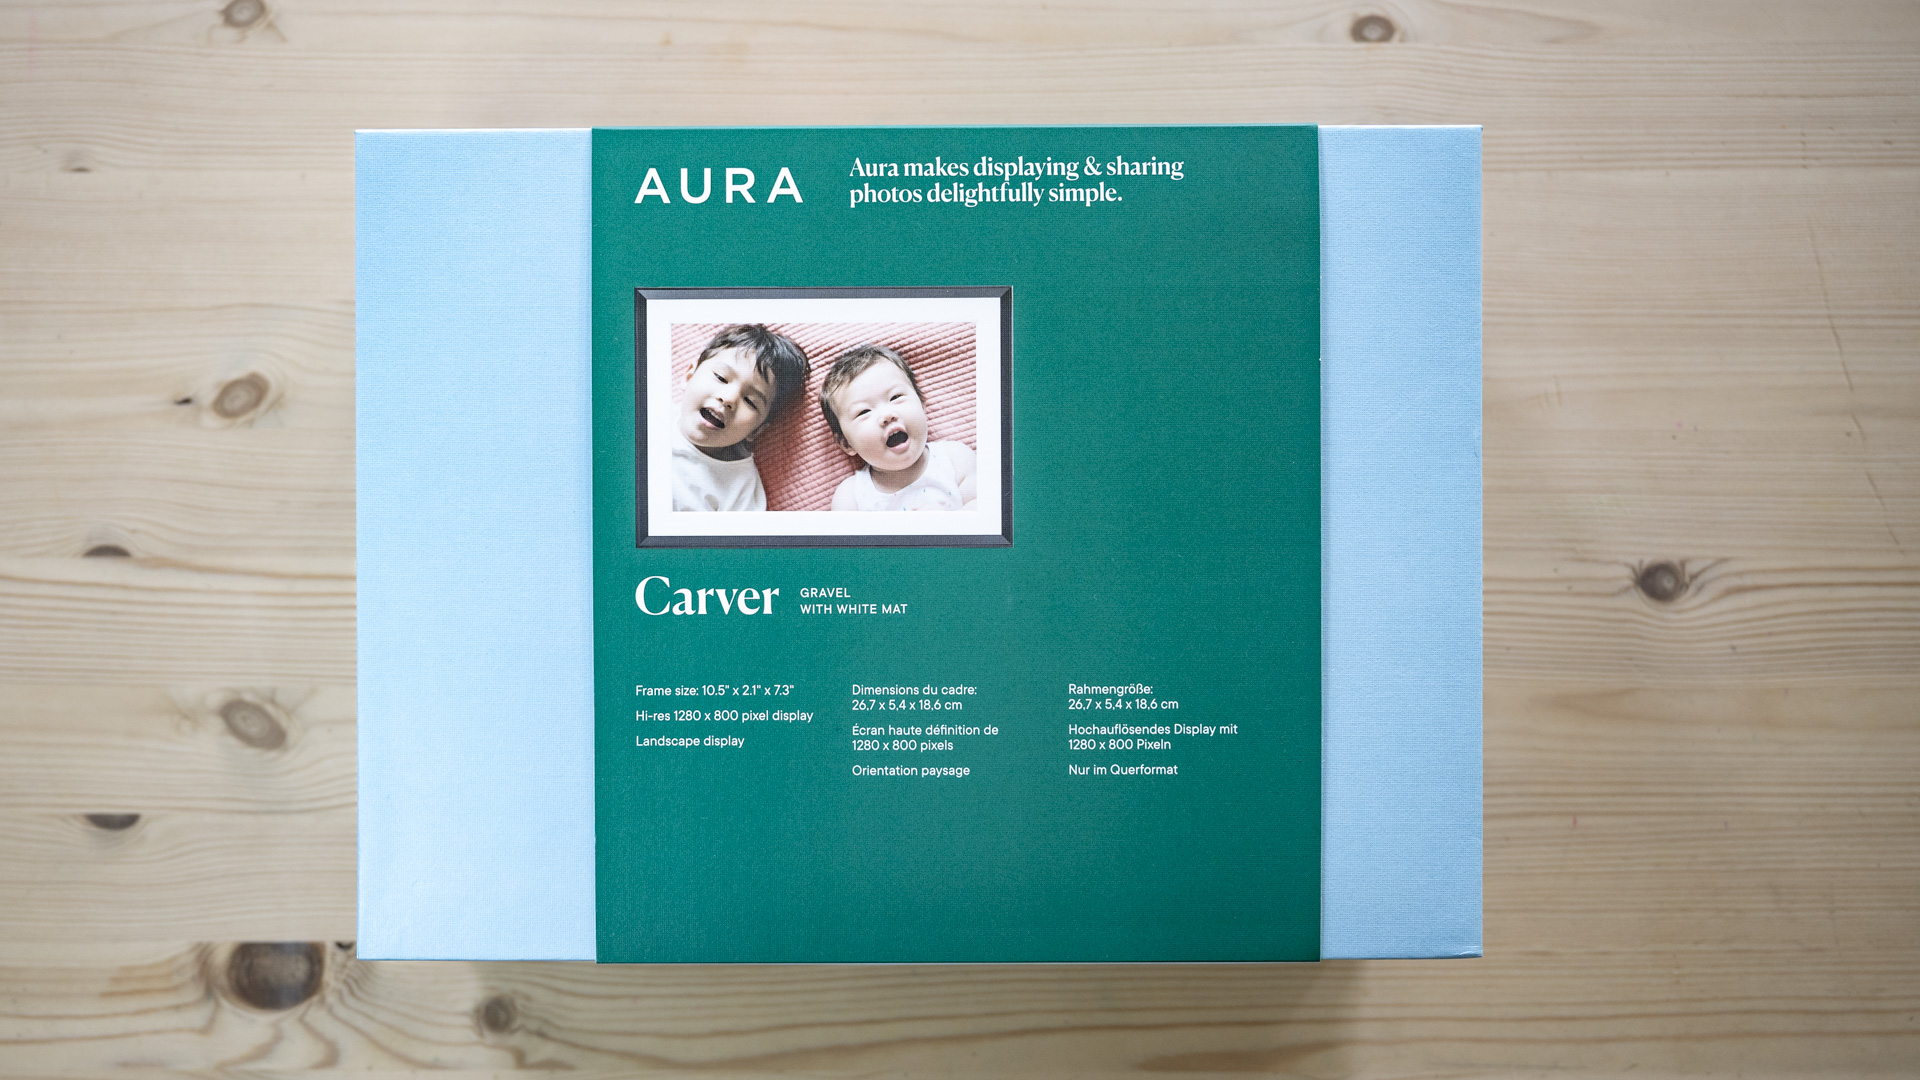 Box of the Aura Carver Mat digital frame